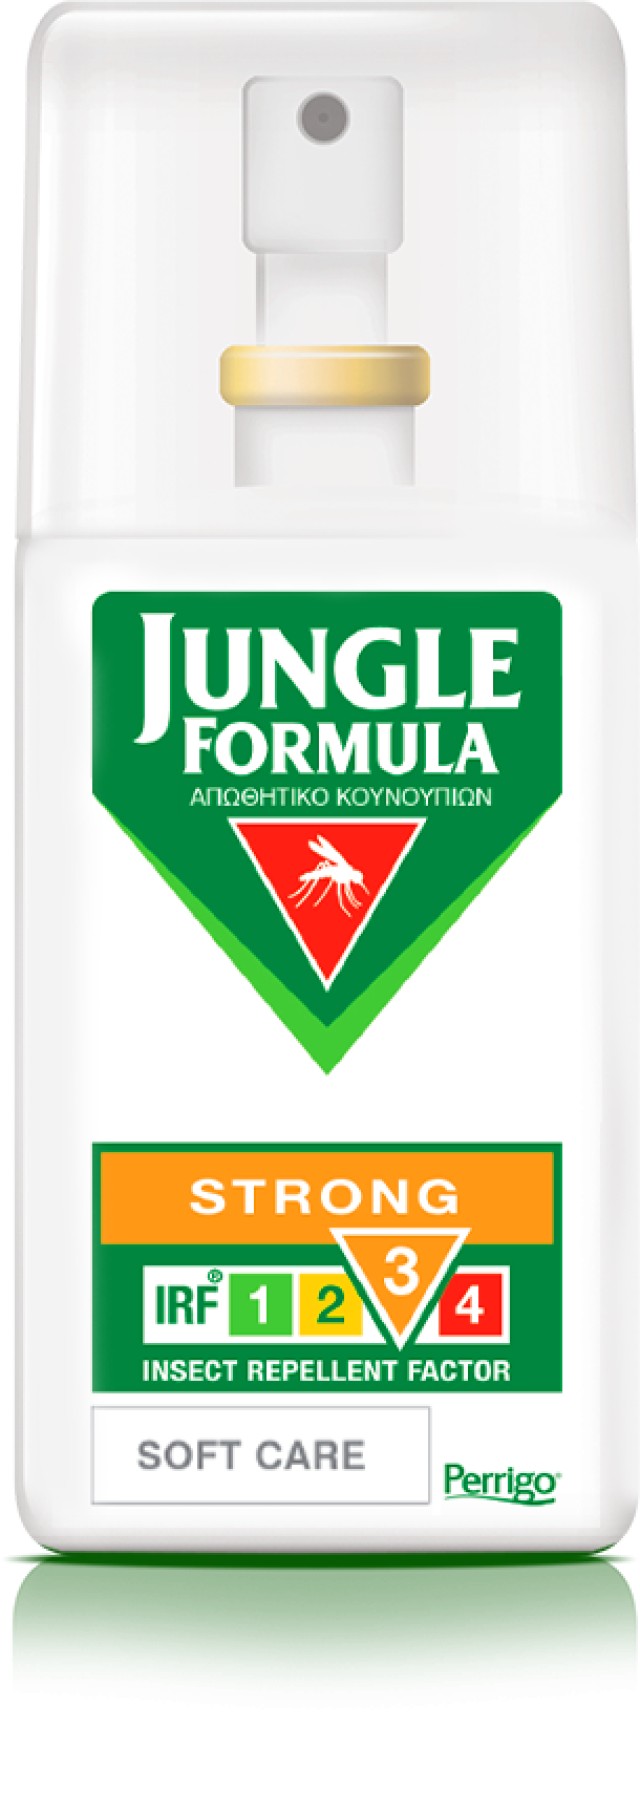 Jungle Formula Strong Soft Care με IRF 3 Spray (χωρίς άρωμα) 75ml product photo